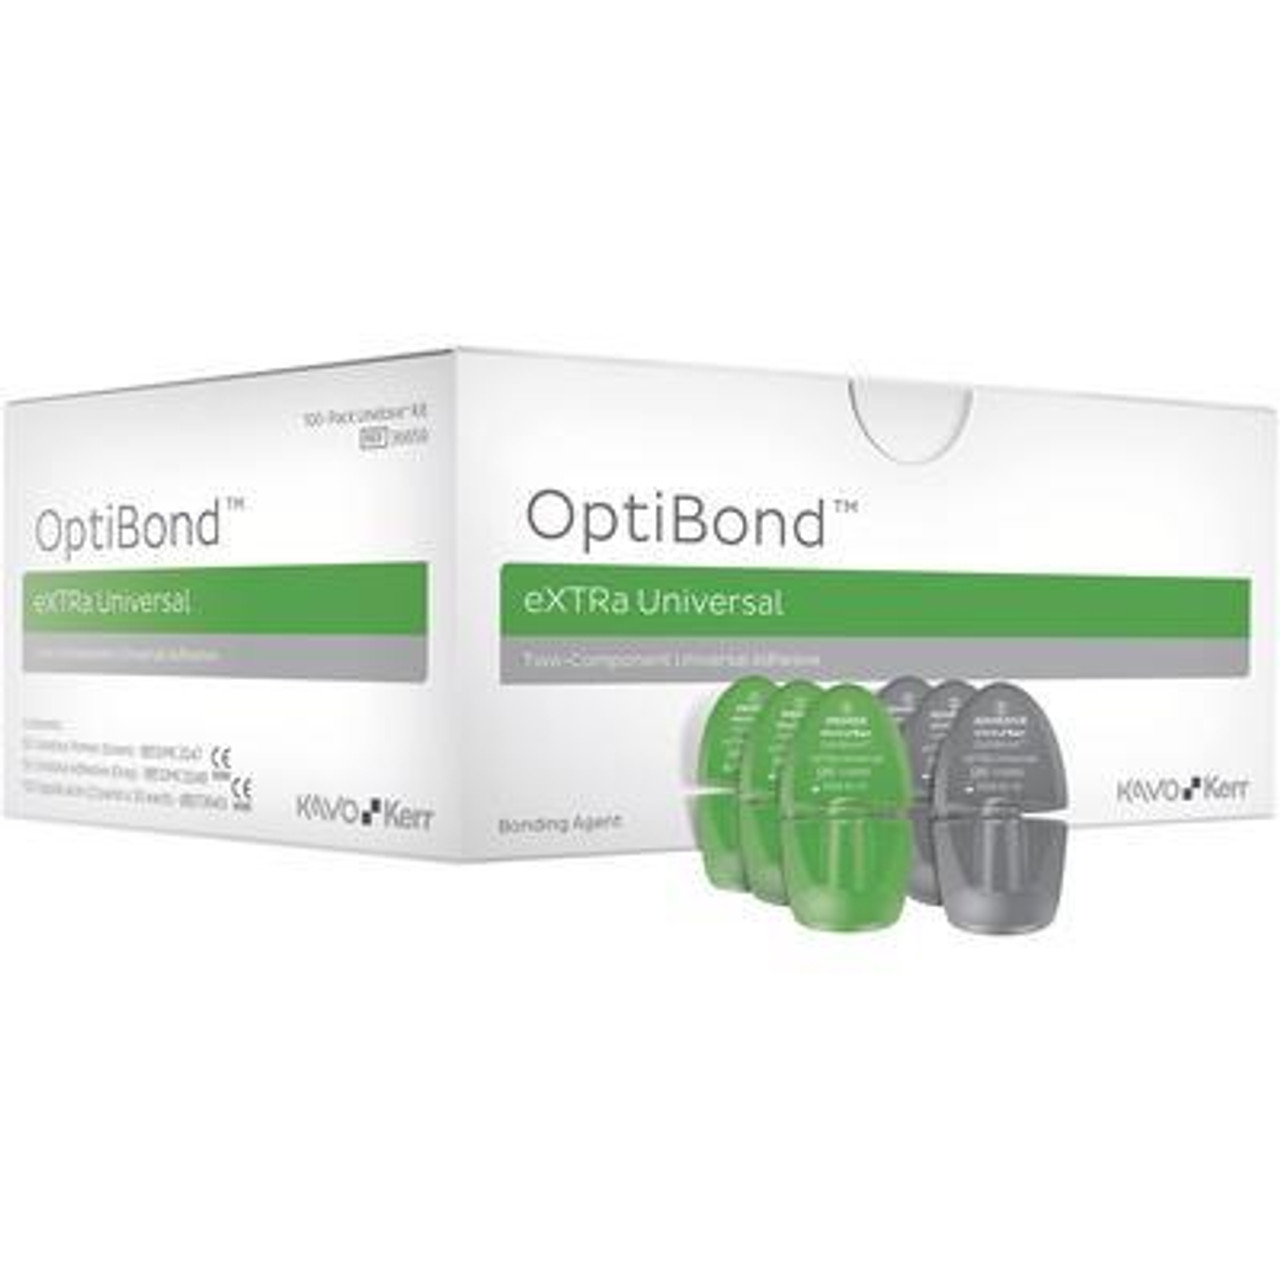 OptiBond eXTRa Universal - Unidose Kit